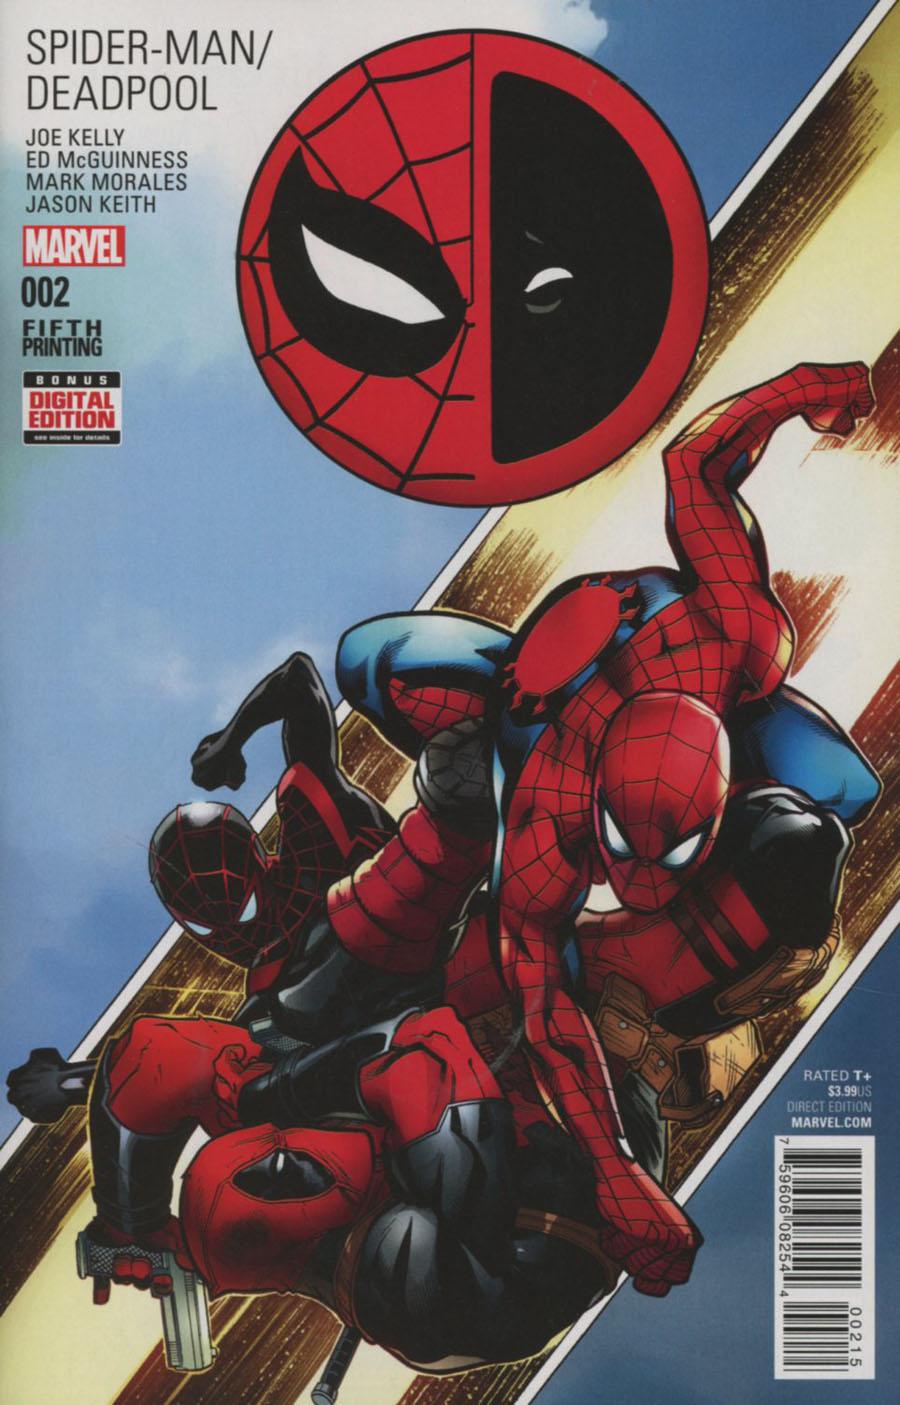 Spider-Man Deadpool Vol. 1 #2